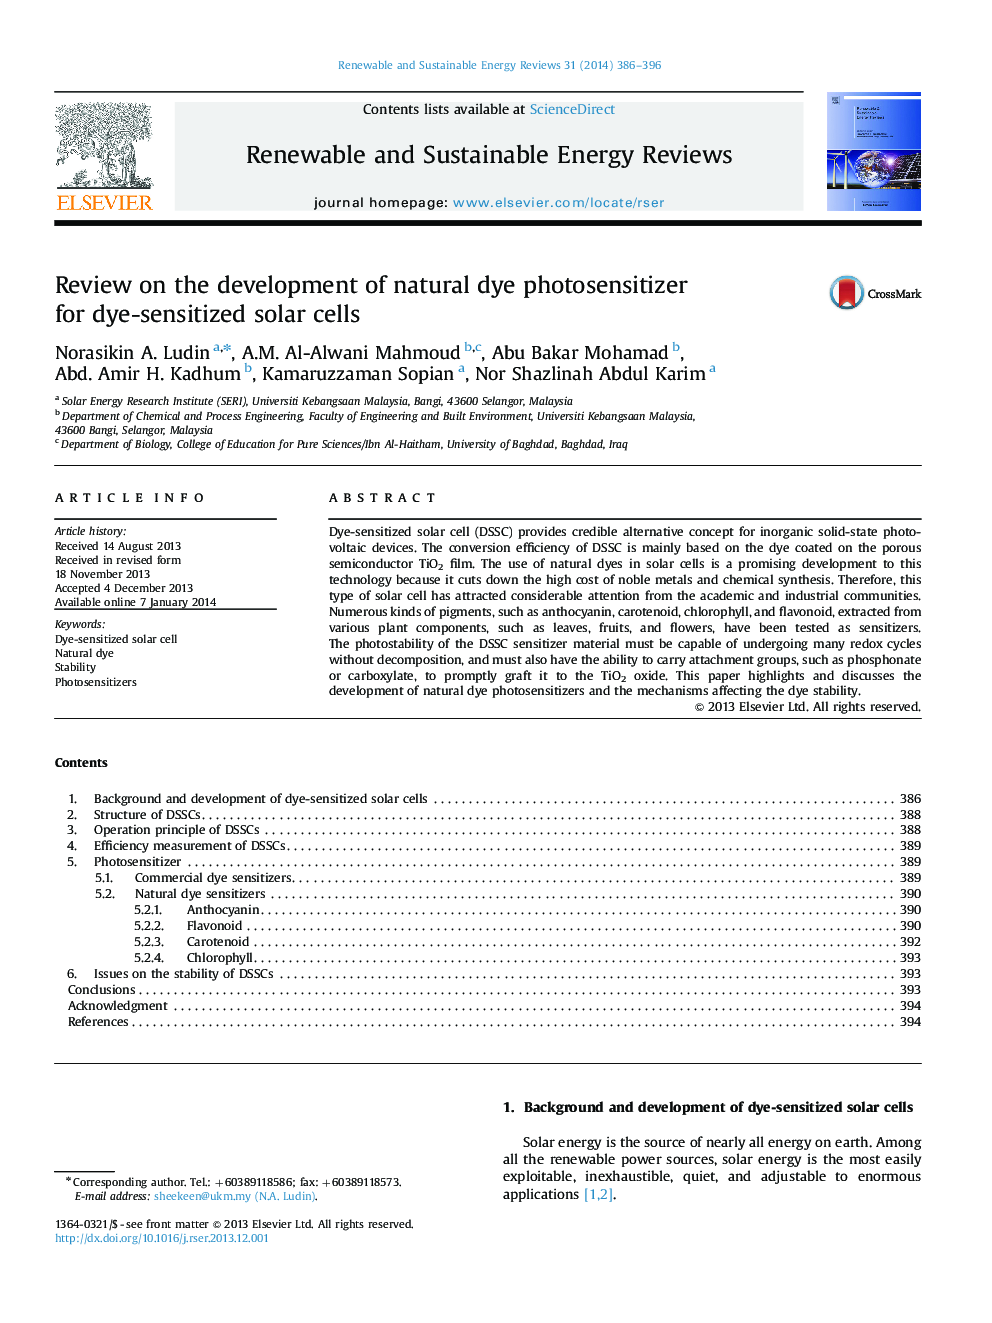 Review on the development of natural dye photosensitizer for dye-sensitized solar cells